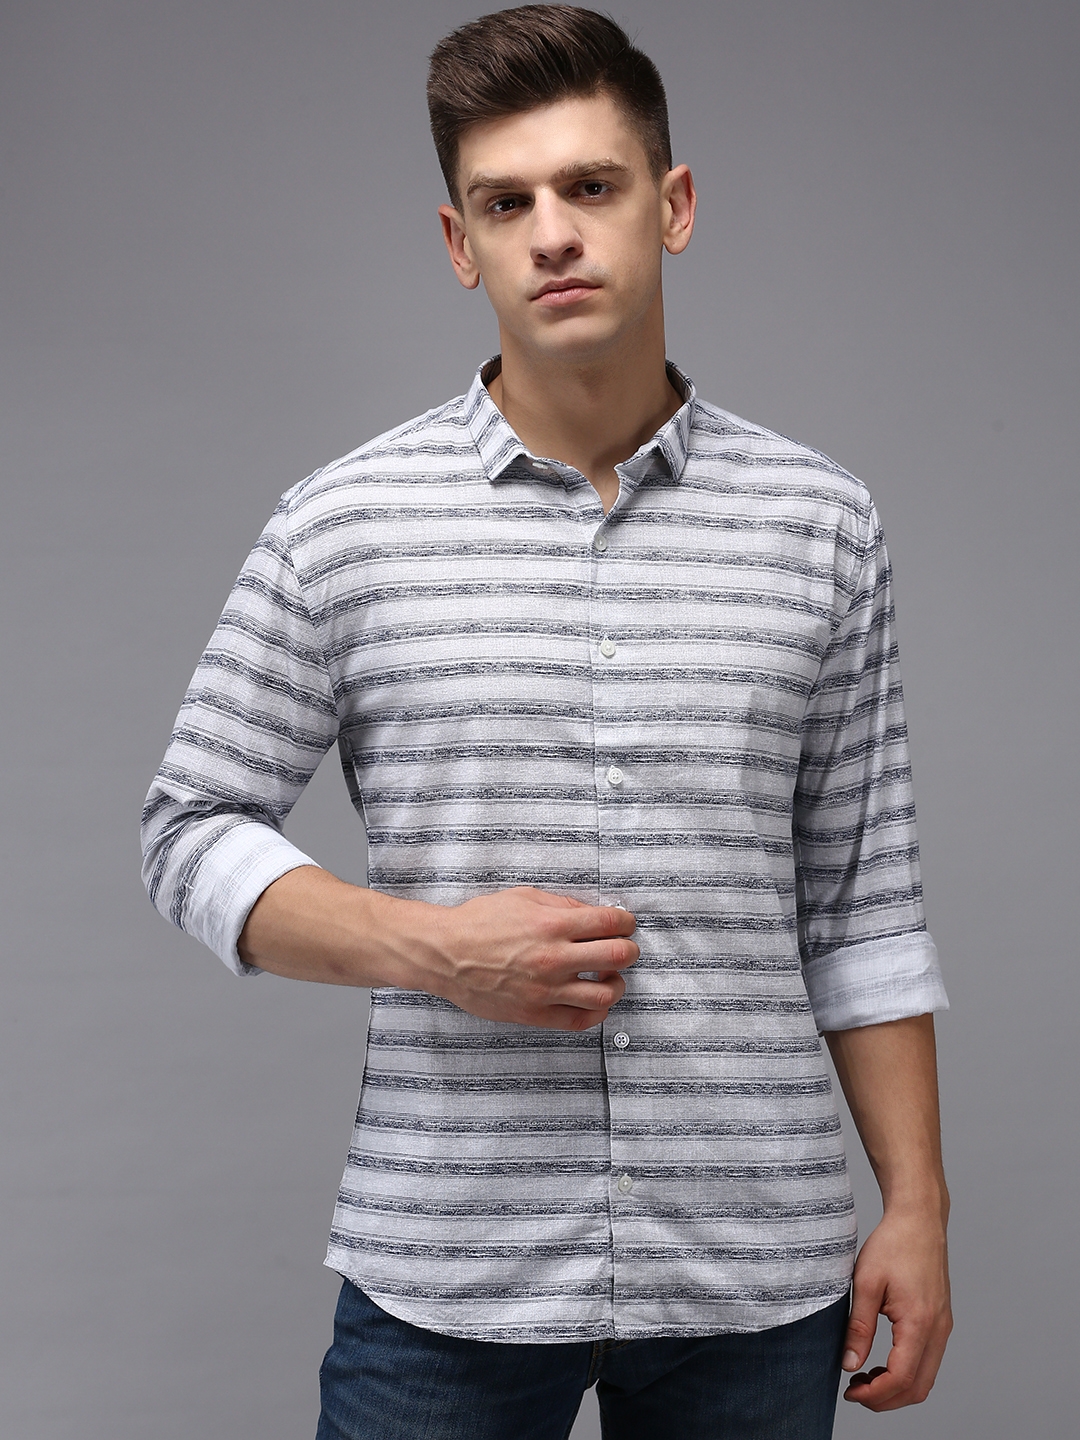 Men's Grey Cotton Striped Casual Shirts